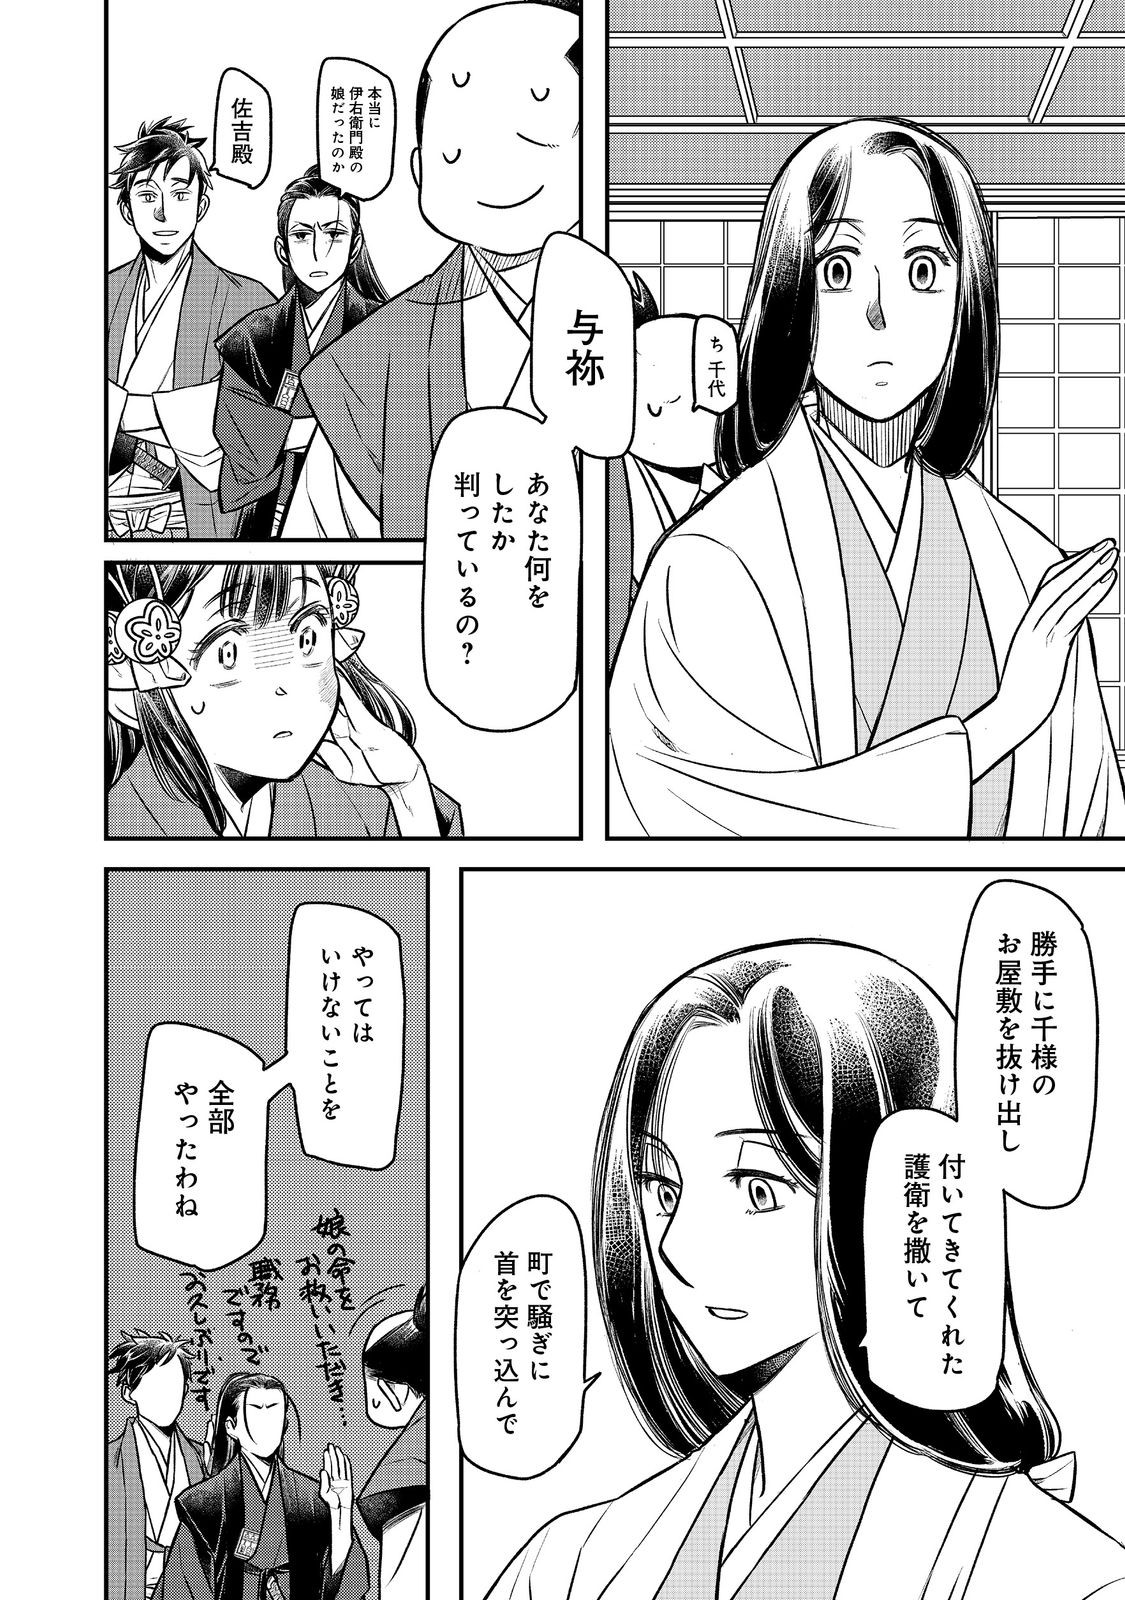 Kitanomandokoro-sama no Okeshougakari - Chapter 6.2 - Page 2